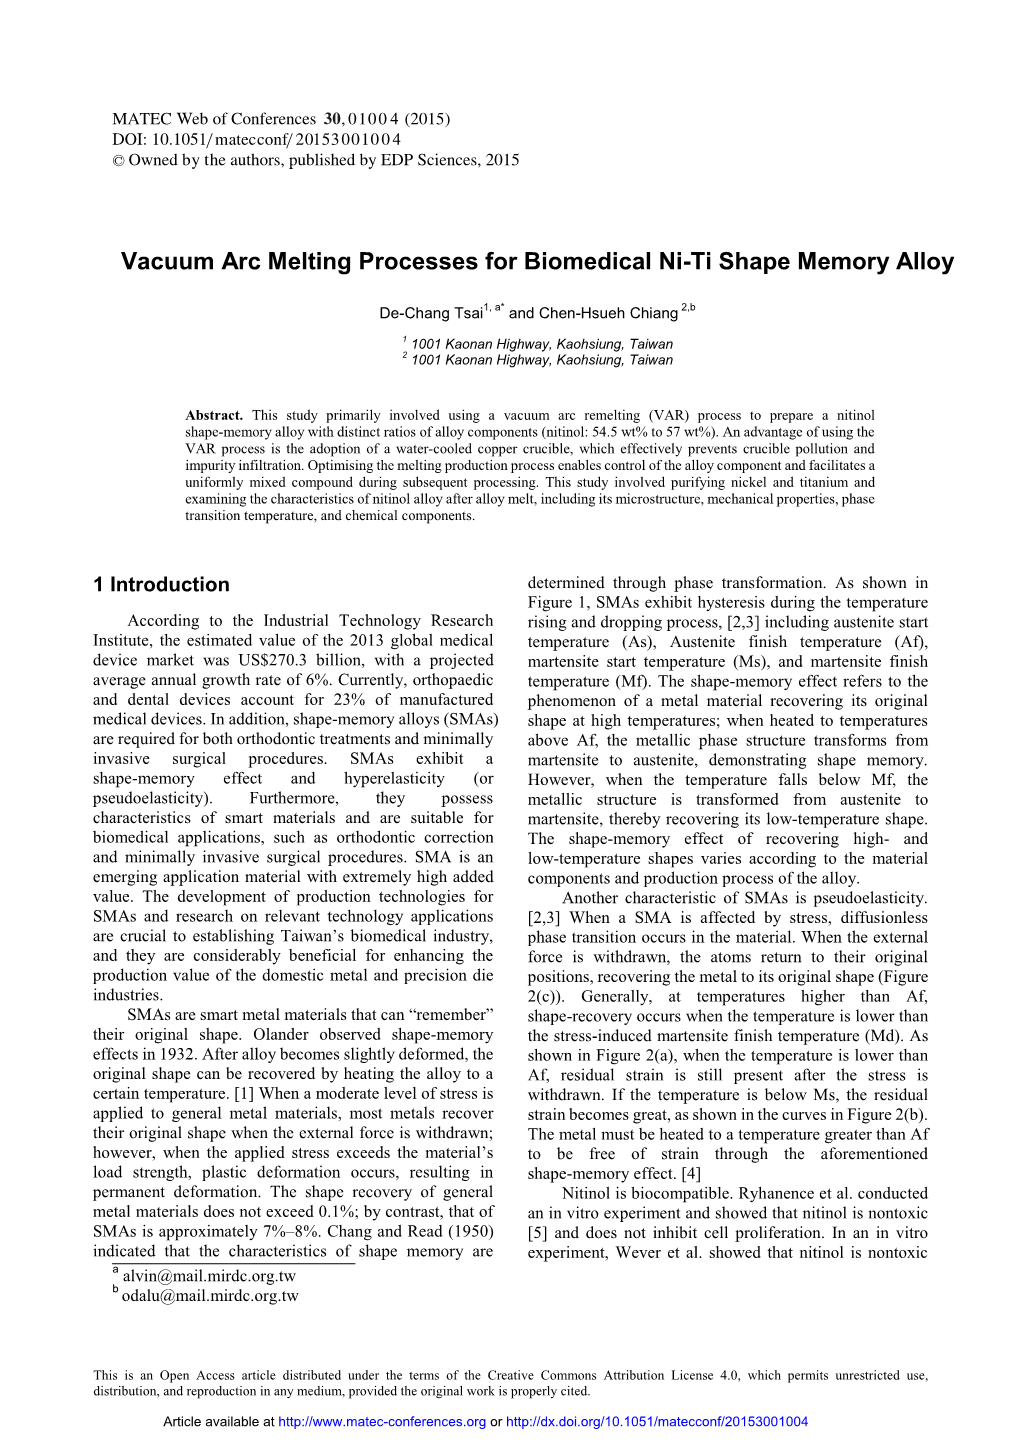 Vacuum Arc Melting Processes for Biomedical Ni-Ti Shape Memory Alloy